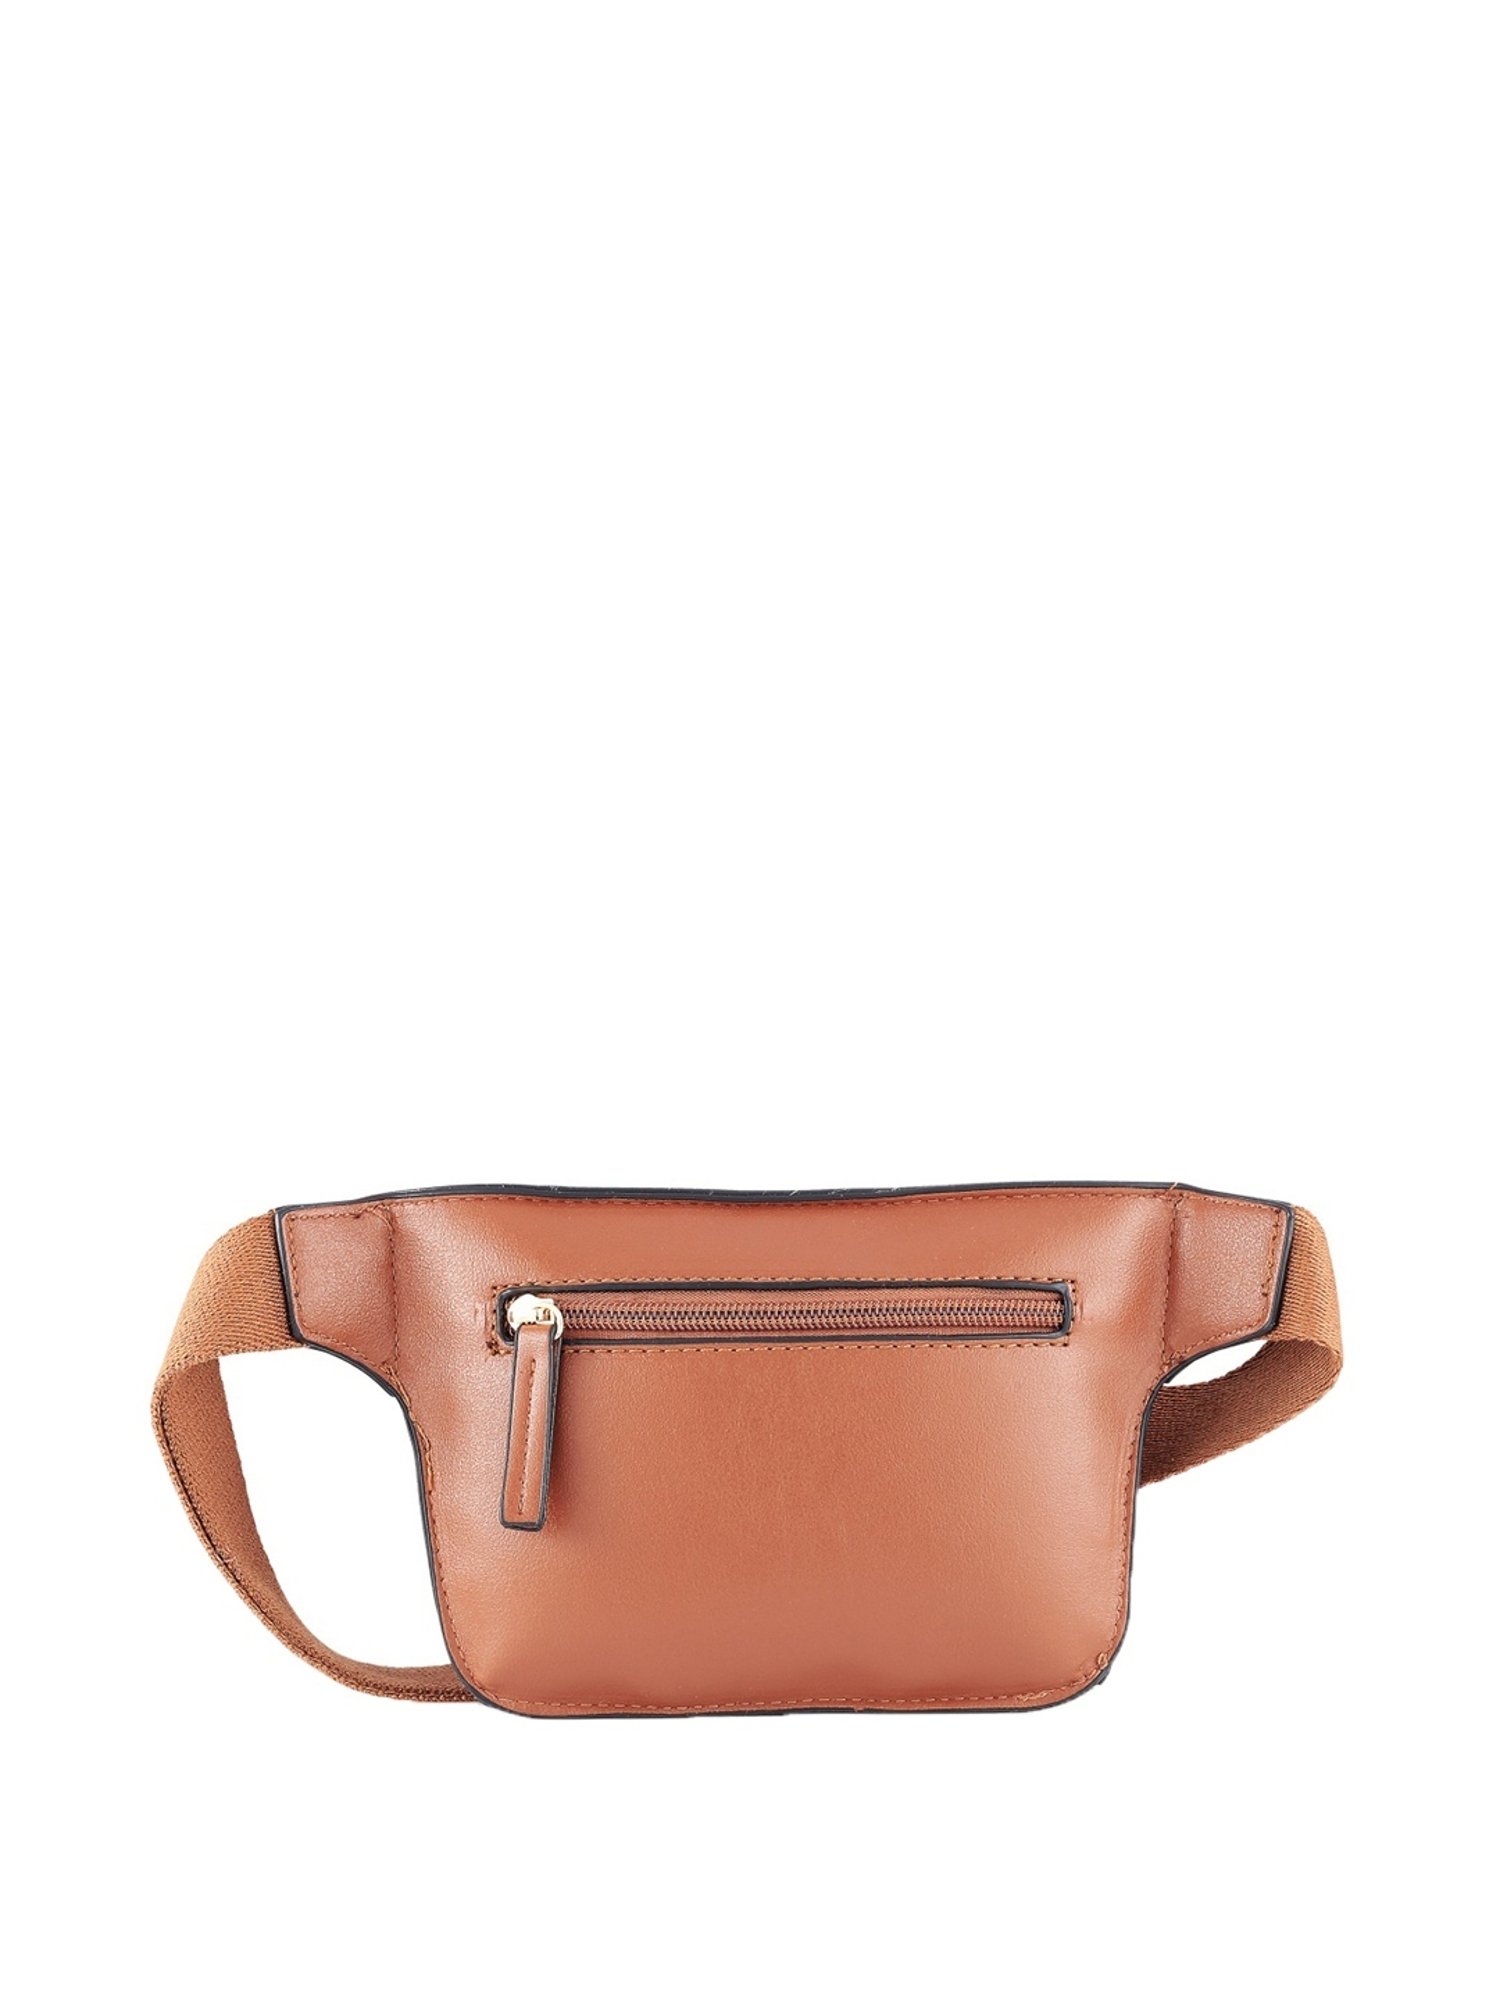 NEW Uniqlo PURPLE Crossbody BAG Round Shoulder IT Handbag Blogger TikTok  BNWT | eBay